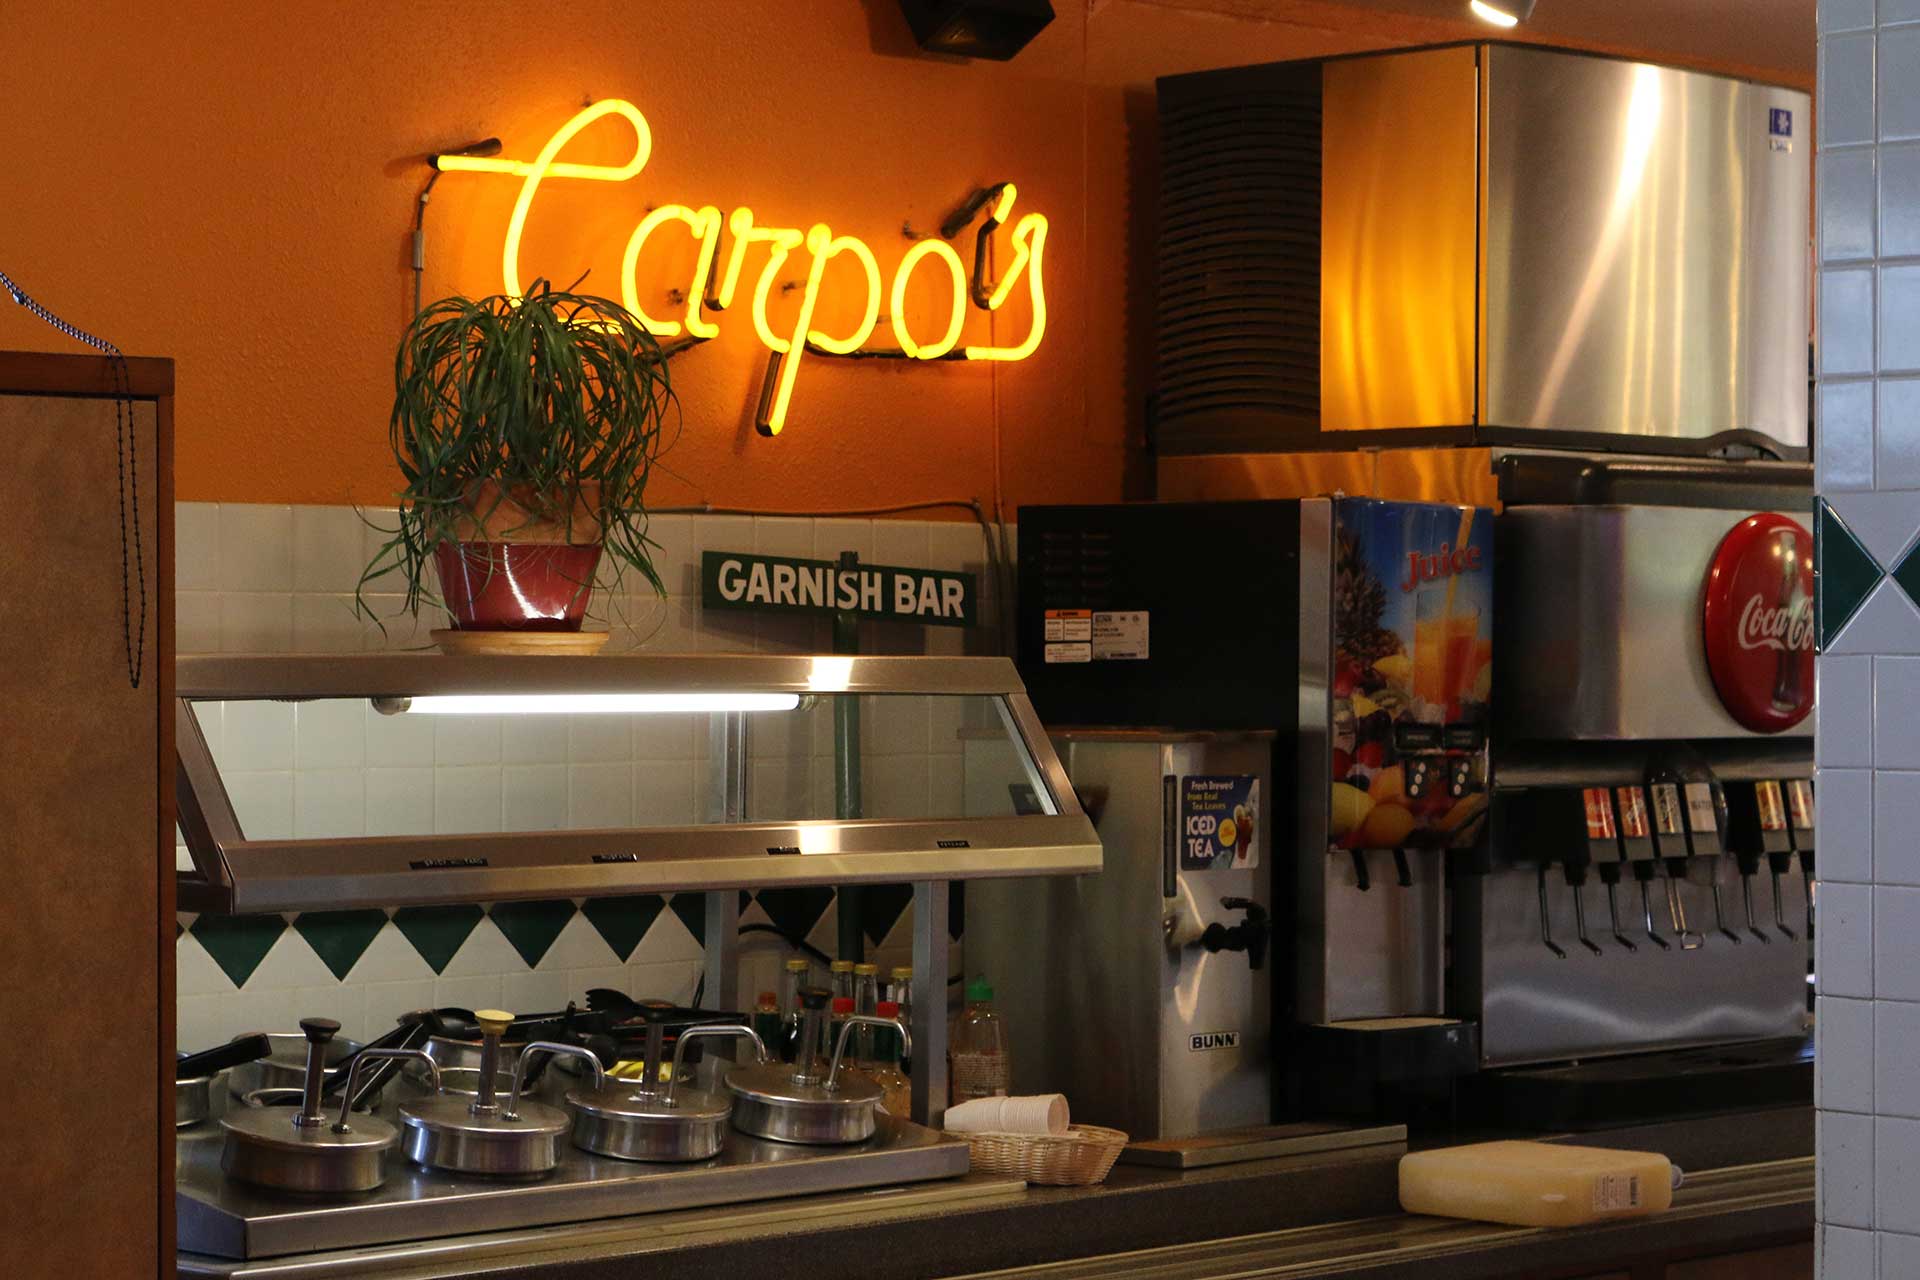 Carpo's Garnish Bar and Drinks, Capitola CA